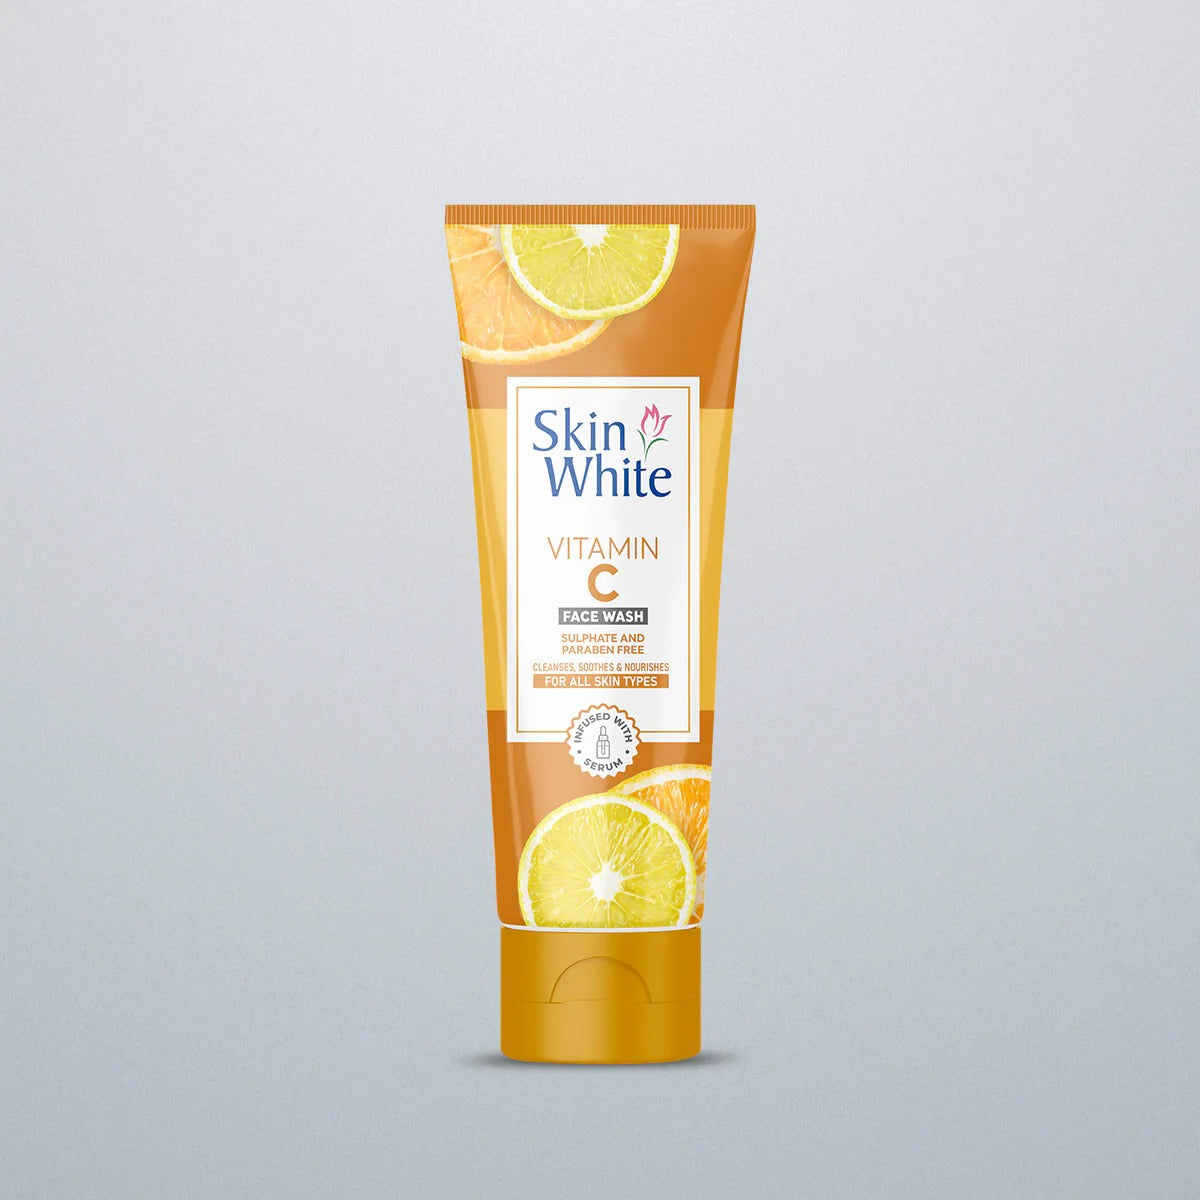 Skin White Vitamin C Face Wash 50 gm